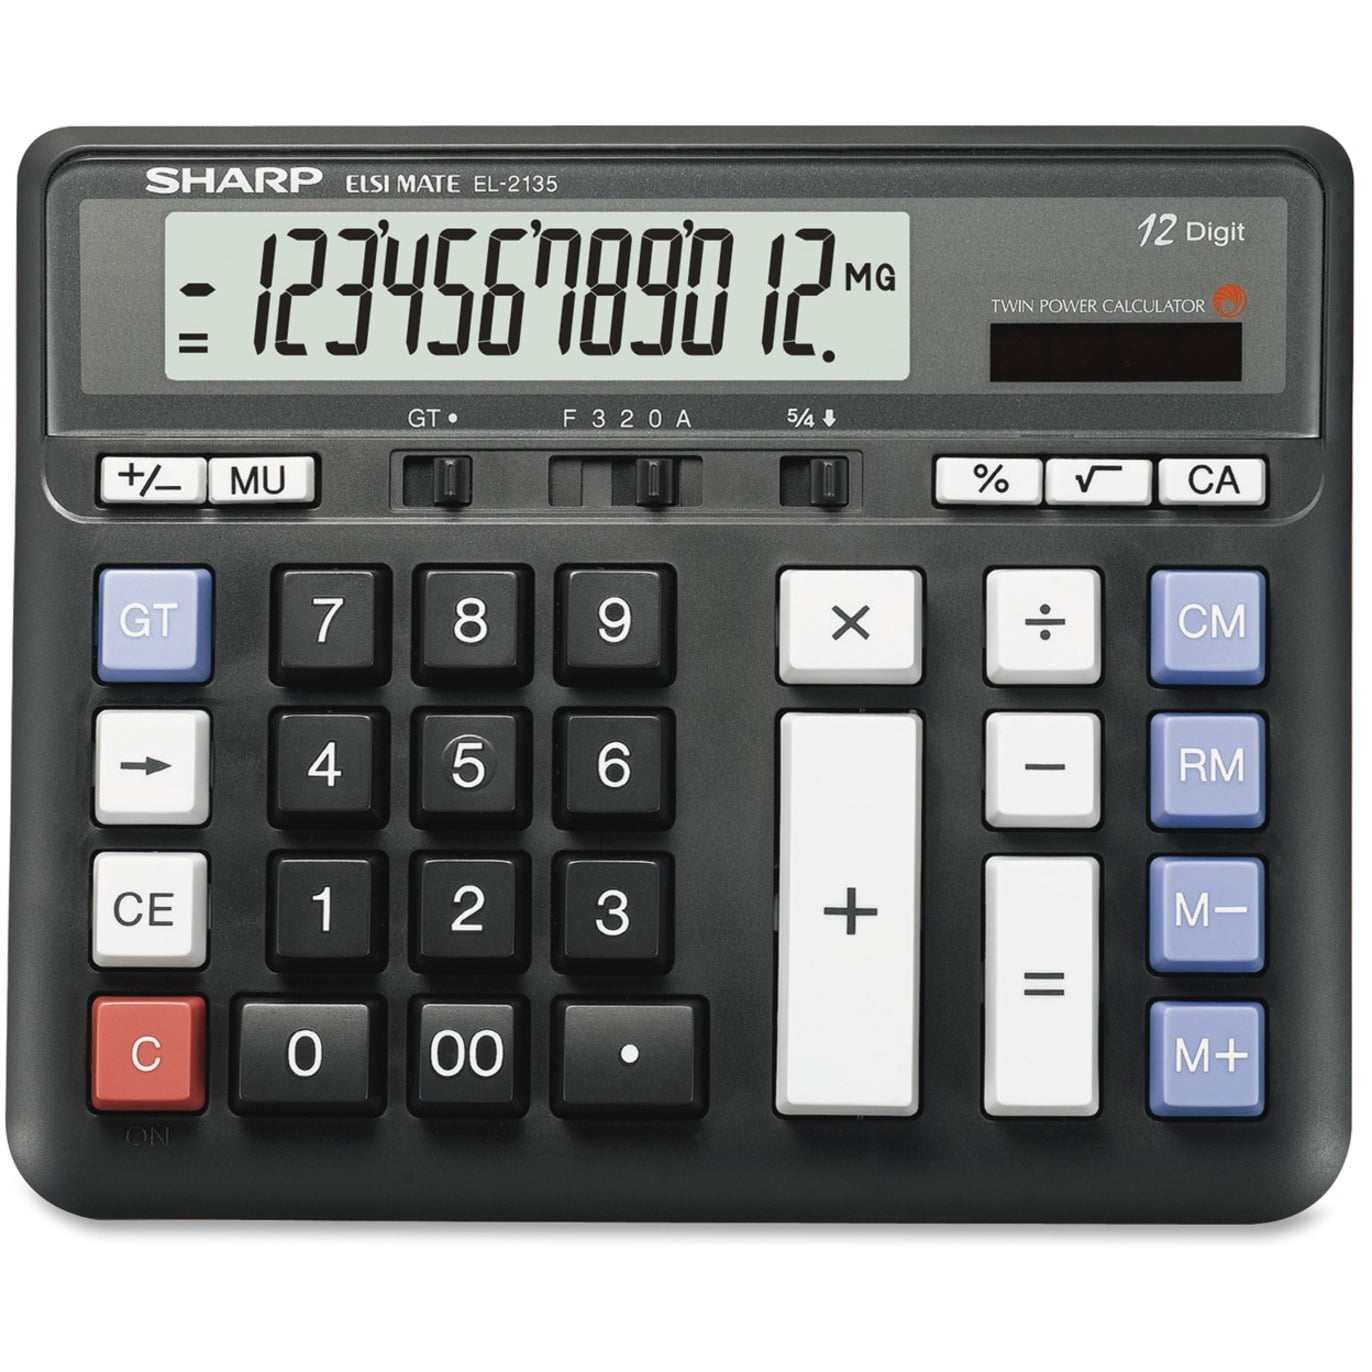 Power calculator